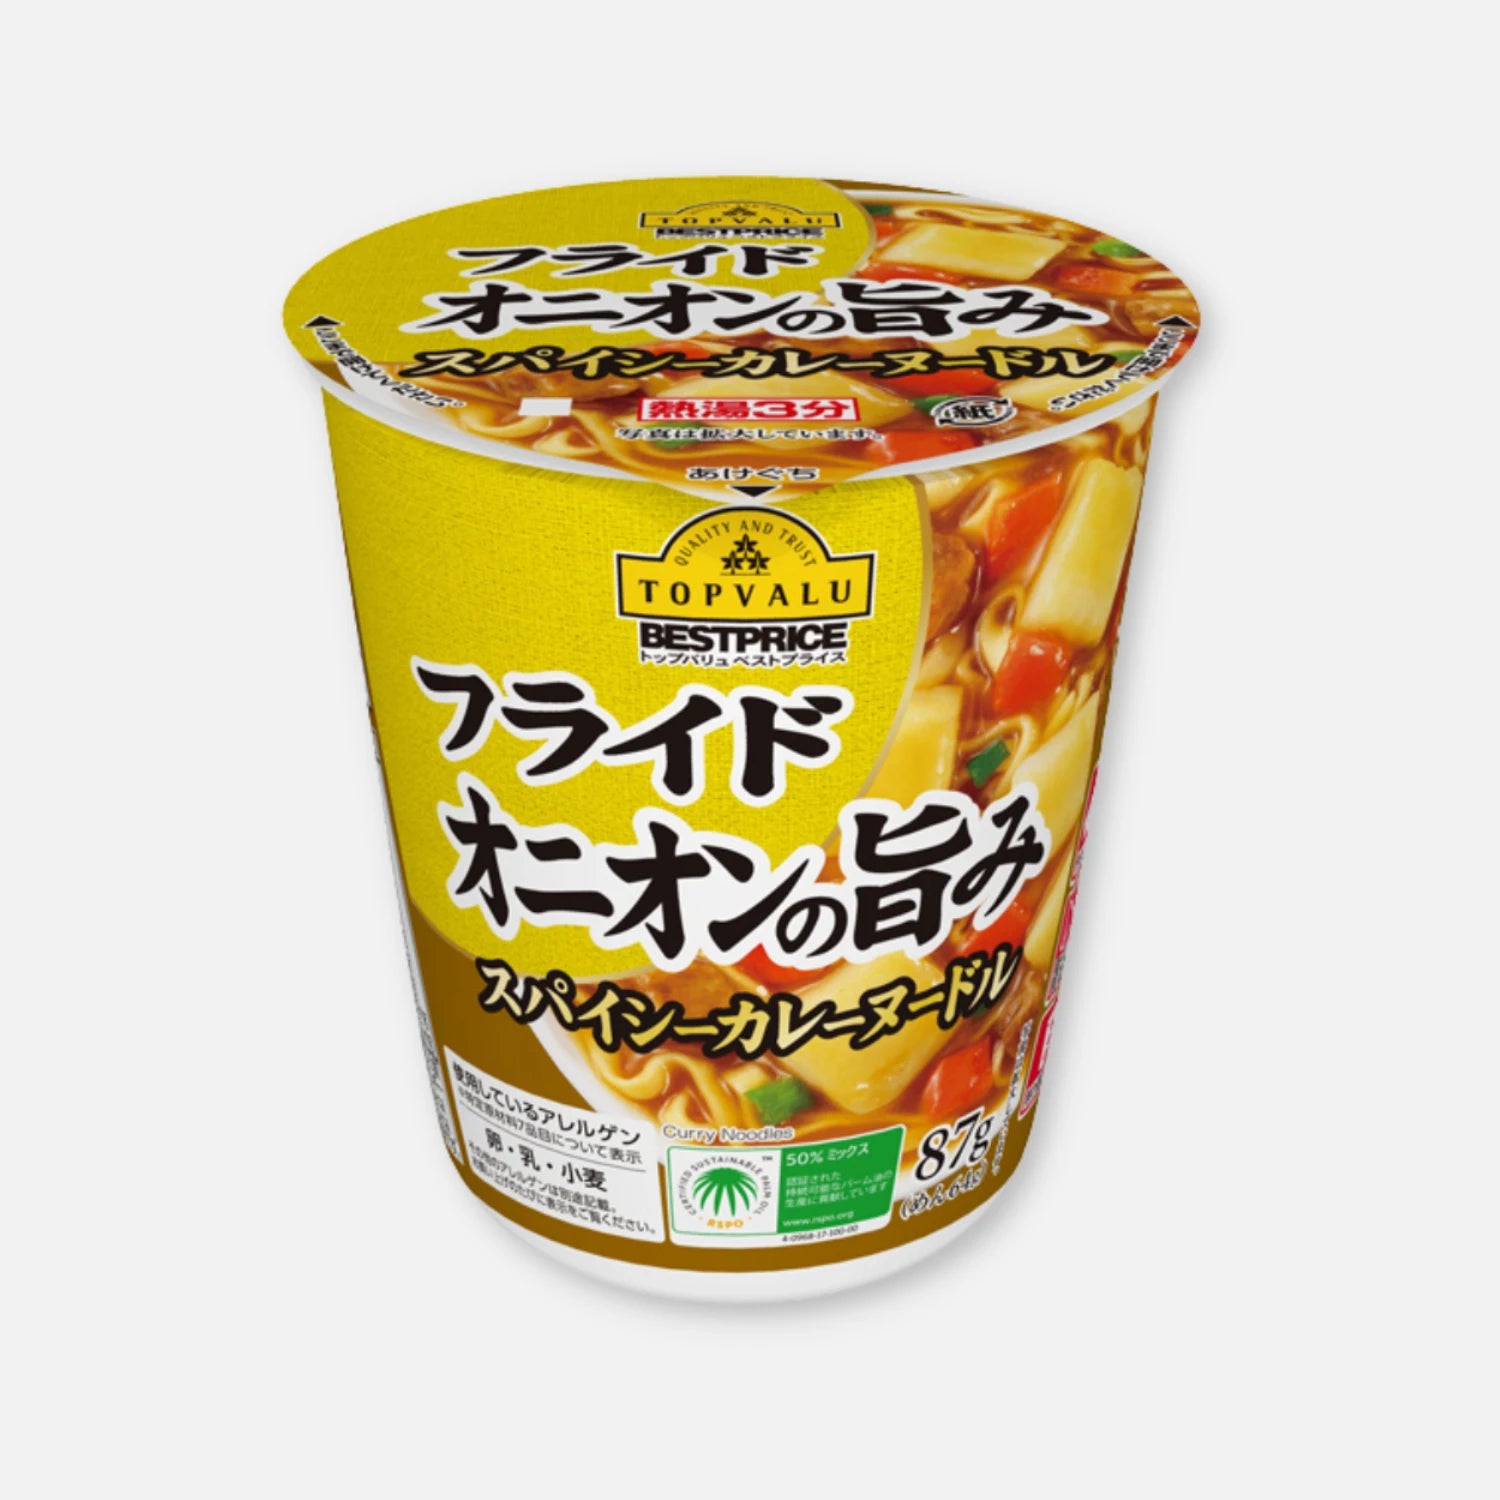 Topvalu Curry Instant Noodle 87g - Buy Me Japan